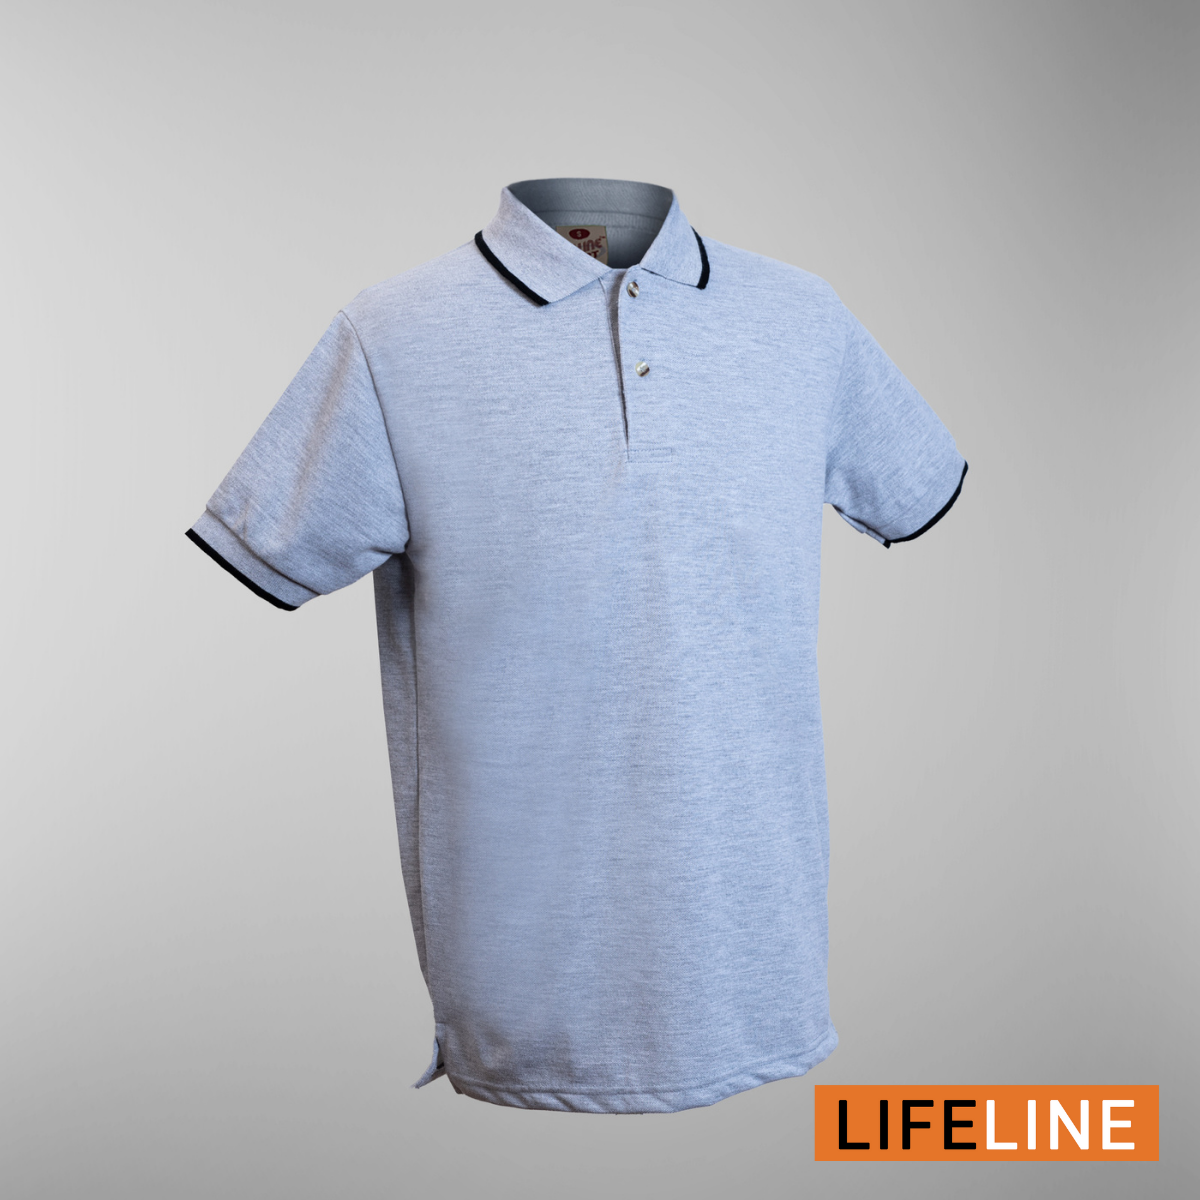 Lifeline Line Polo Shirt (Heather Gray)